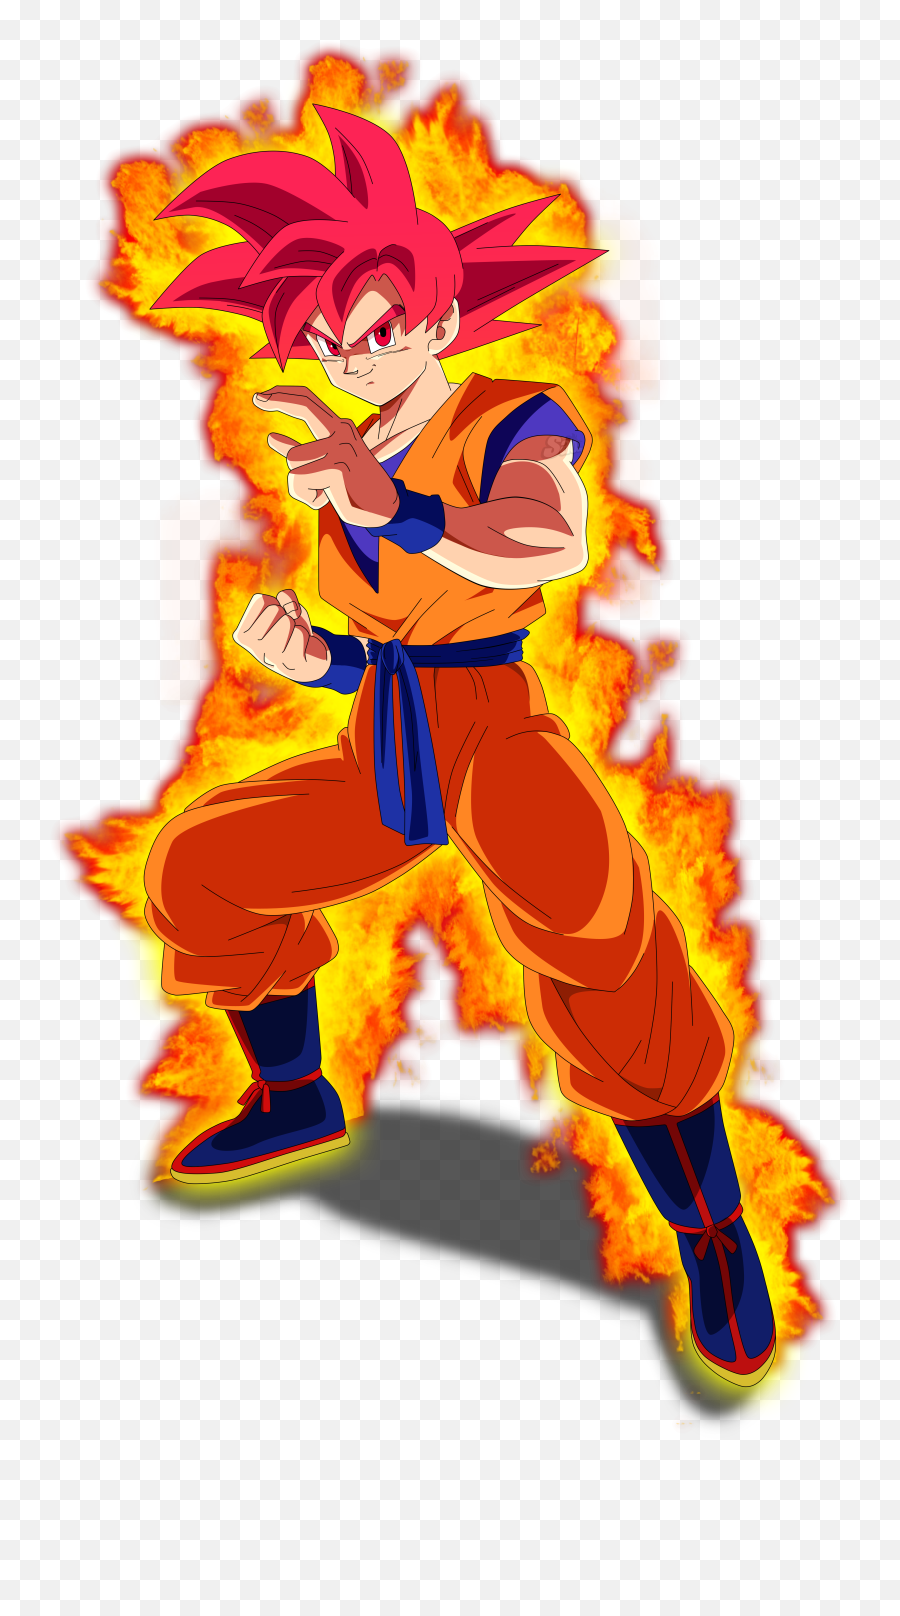 Super Saiyan Red God Goku On Fire In Fighting Position - Goku God Emoji,Fighting Emoji